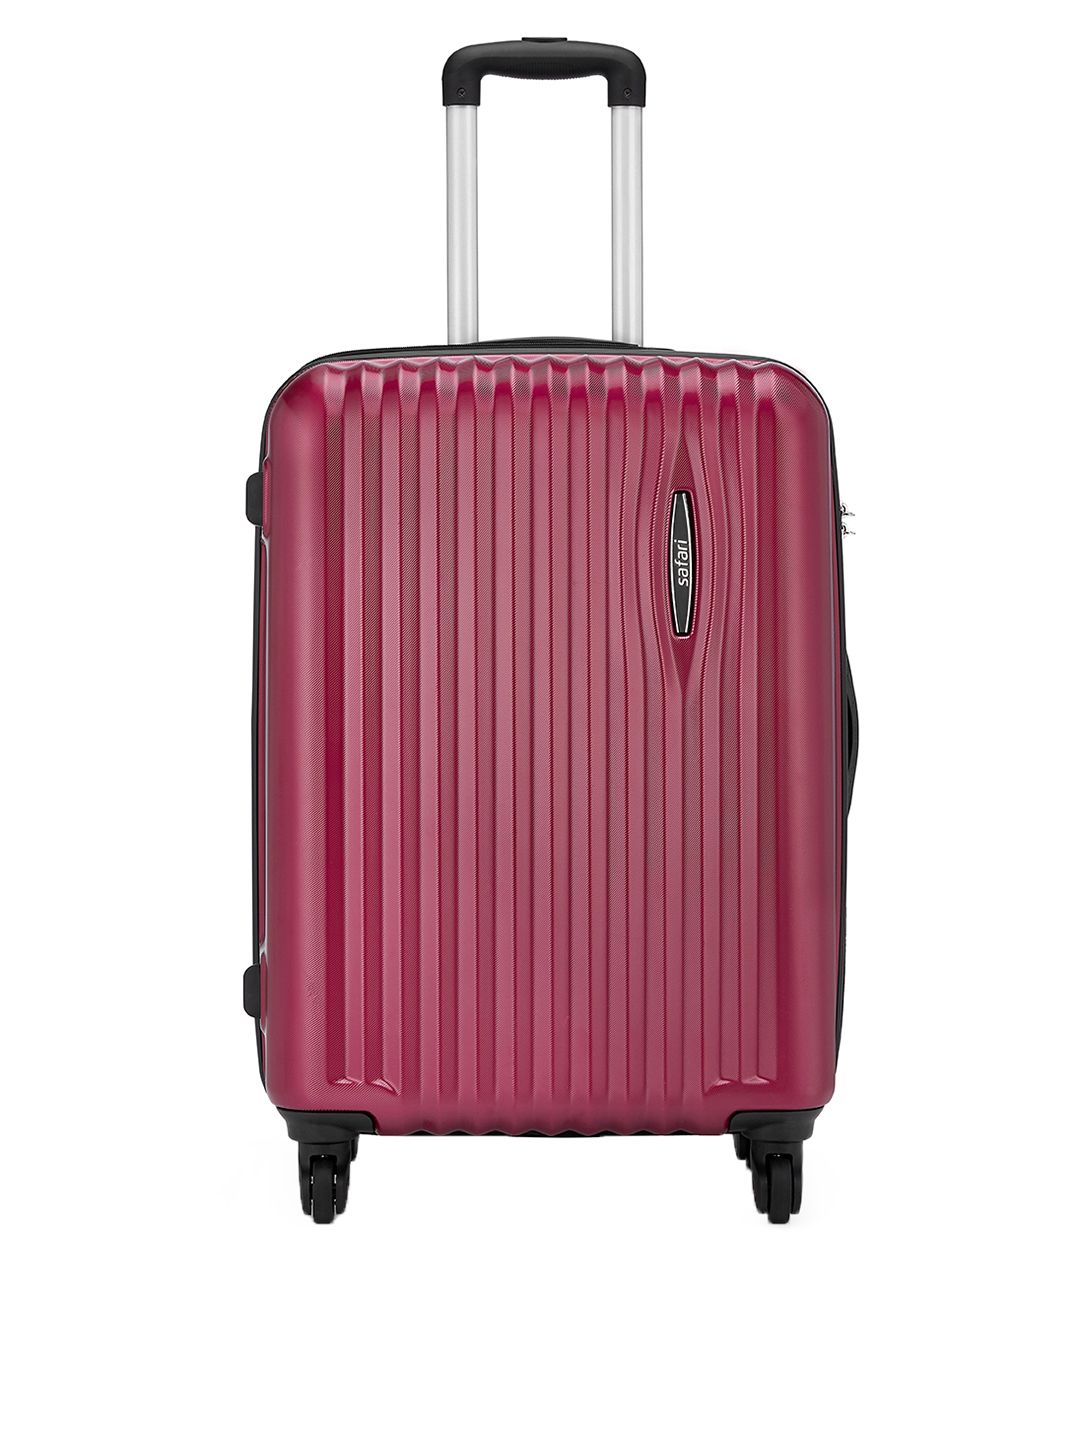 Safari Red 69 cm Premium Hardsided Trolley Suitcase Price in India